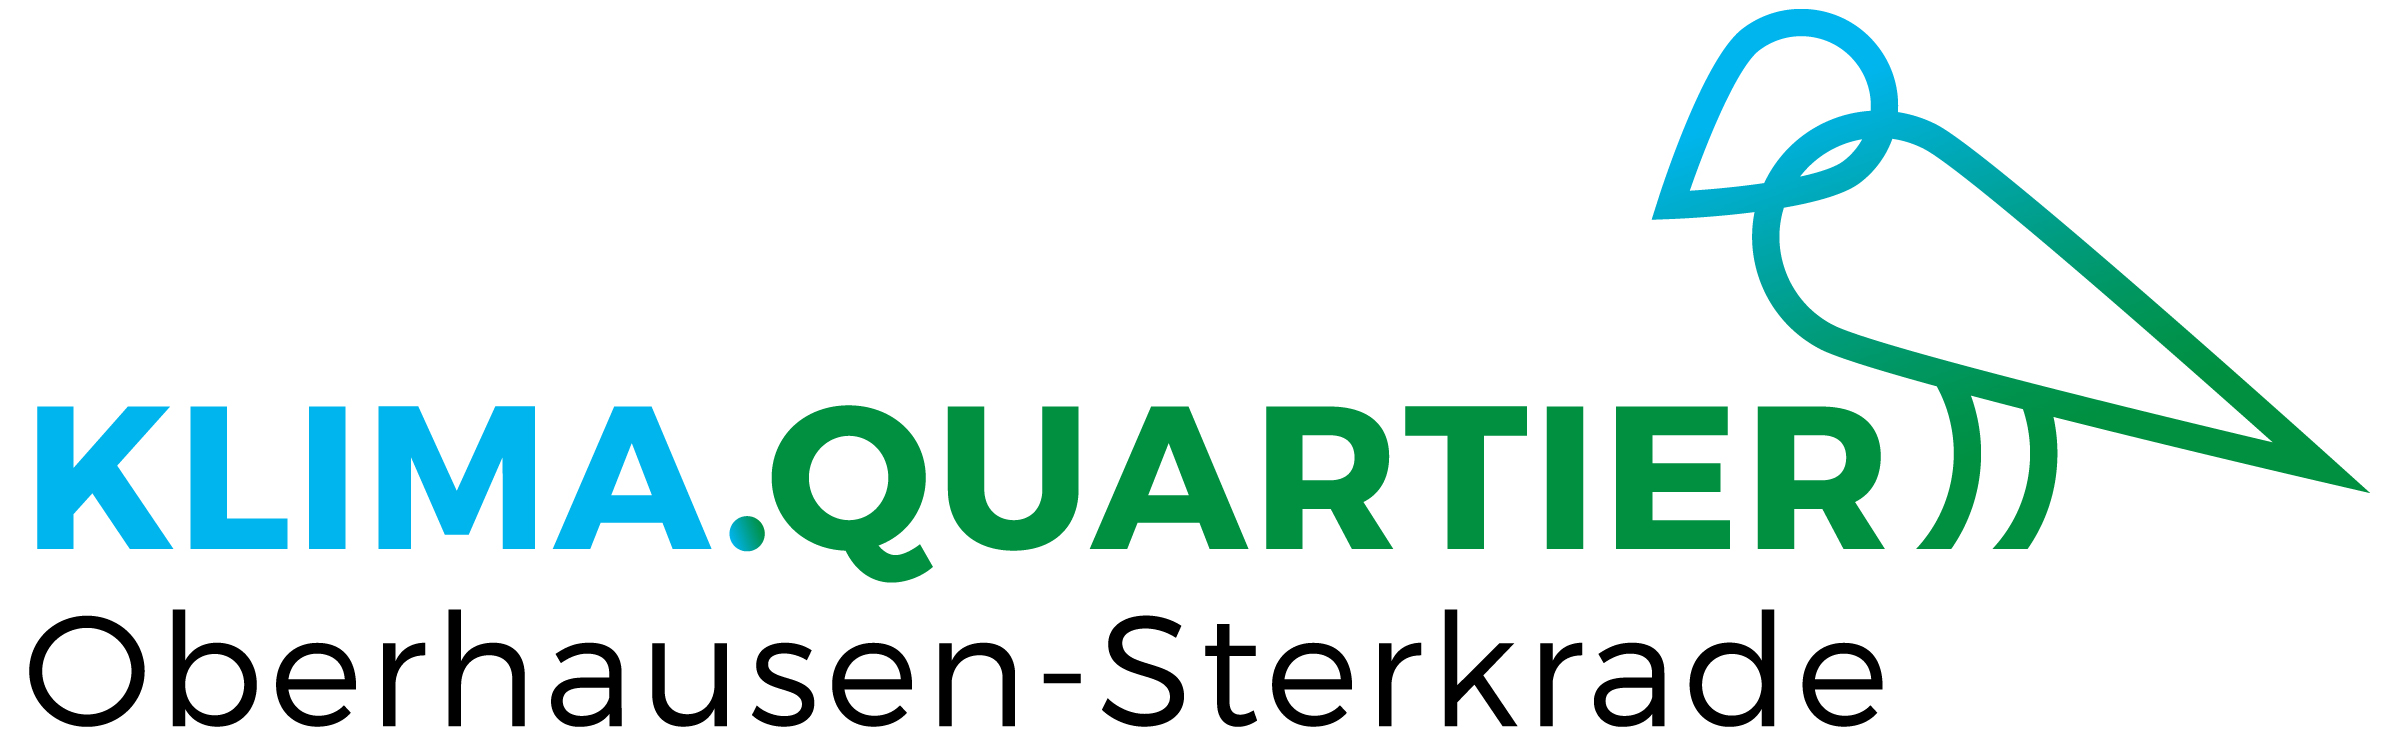 Klima.Quartier Oberhausen-Sterkrade: Webseite zum Projekt gestartet